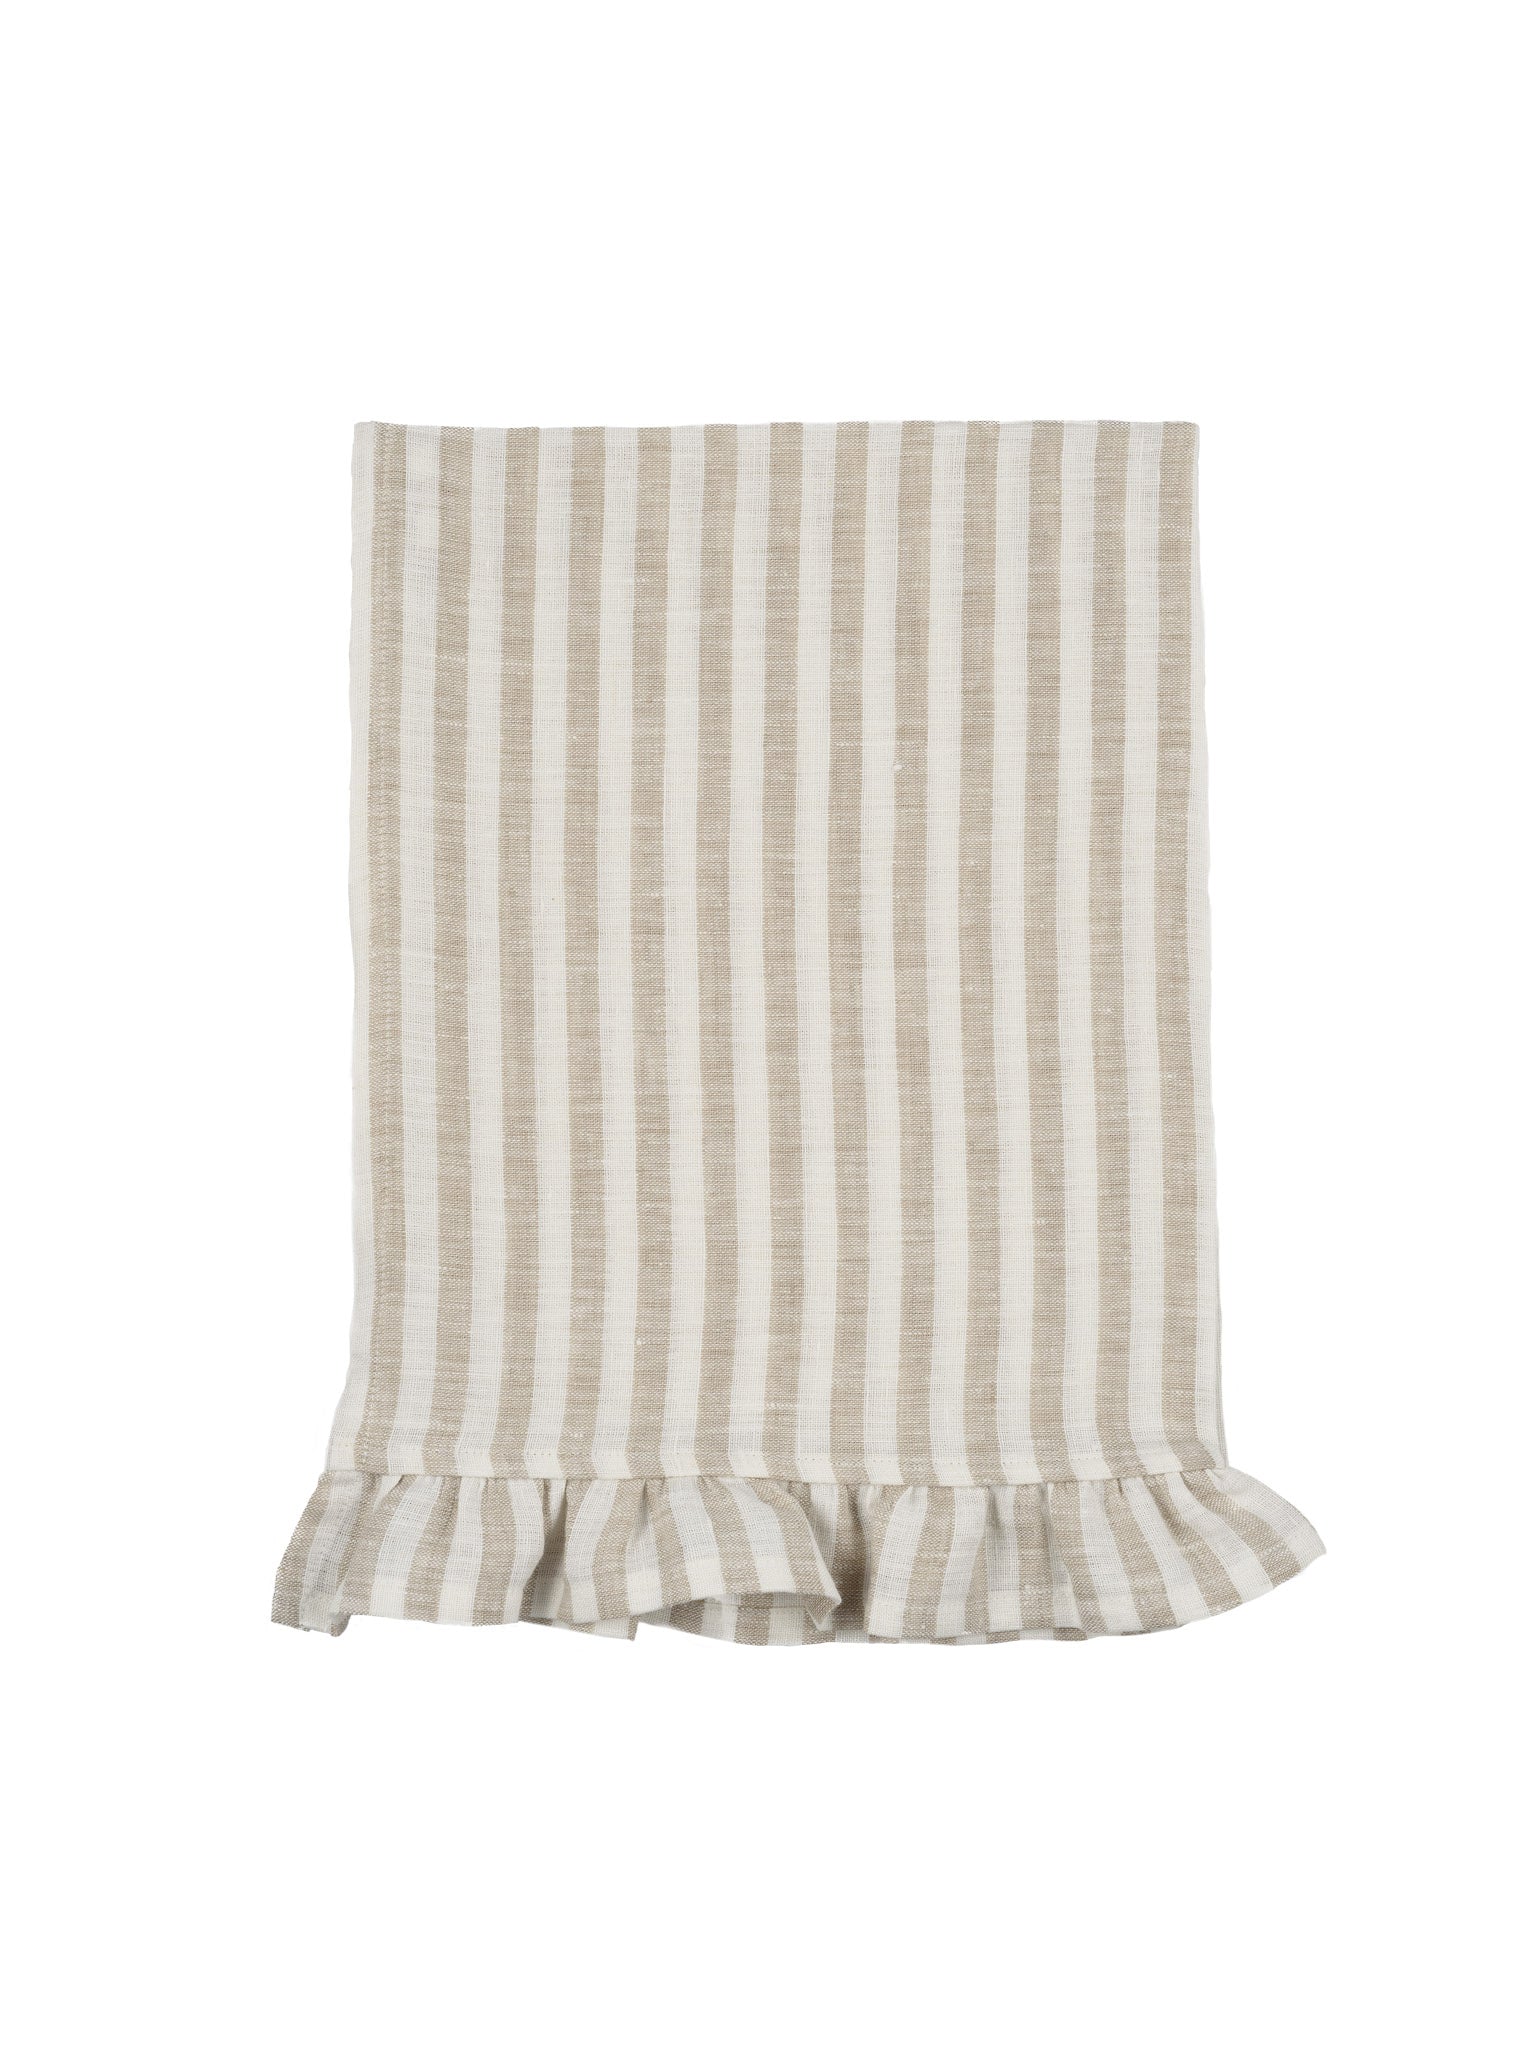 Ruffle Linen Tea Towels